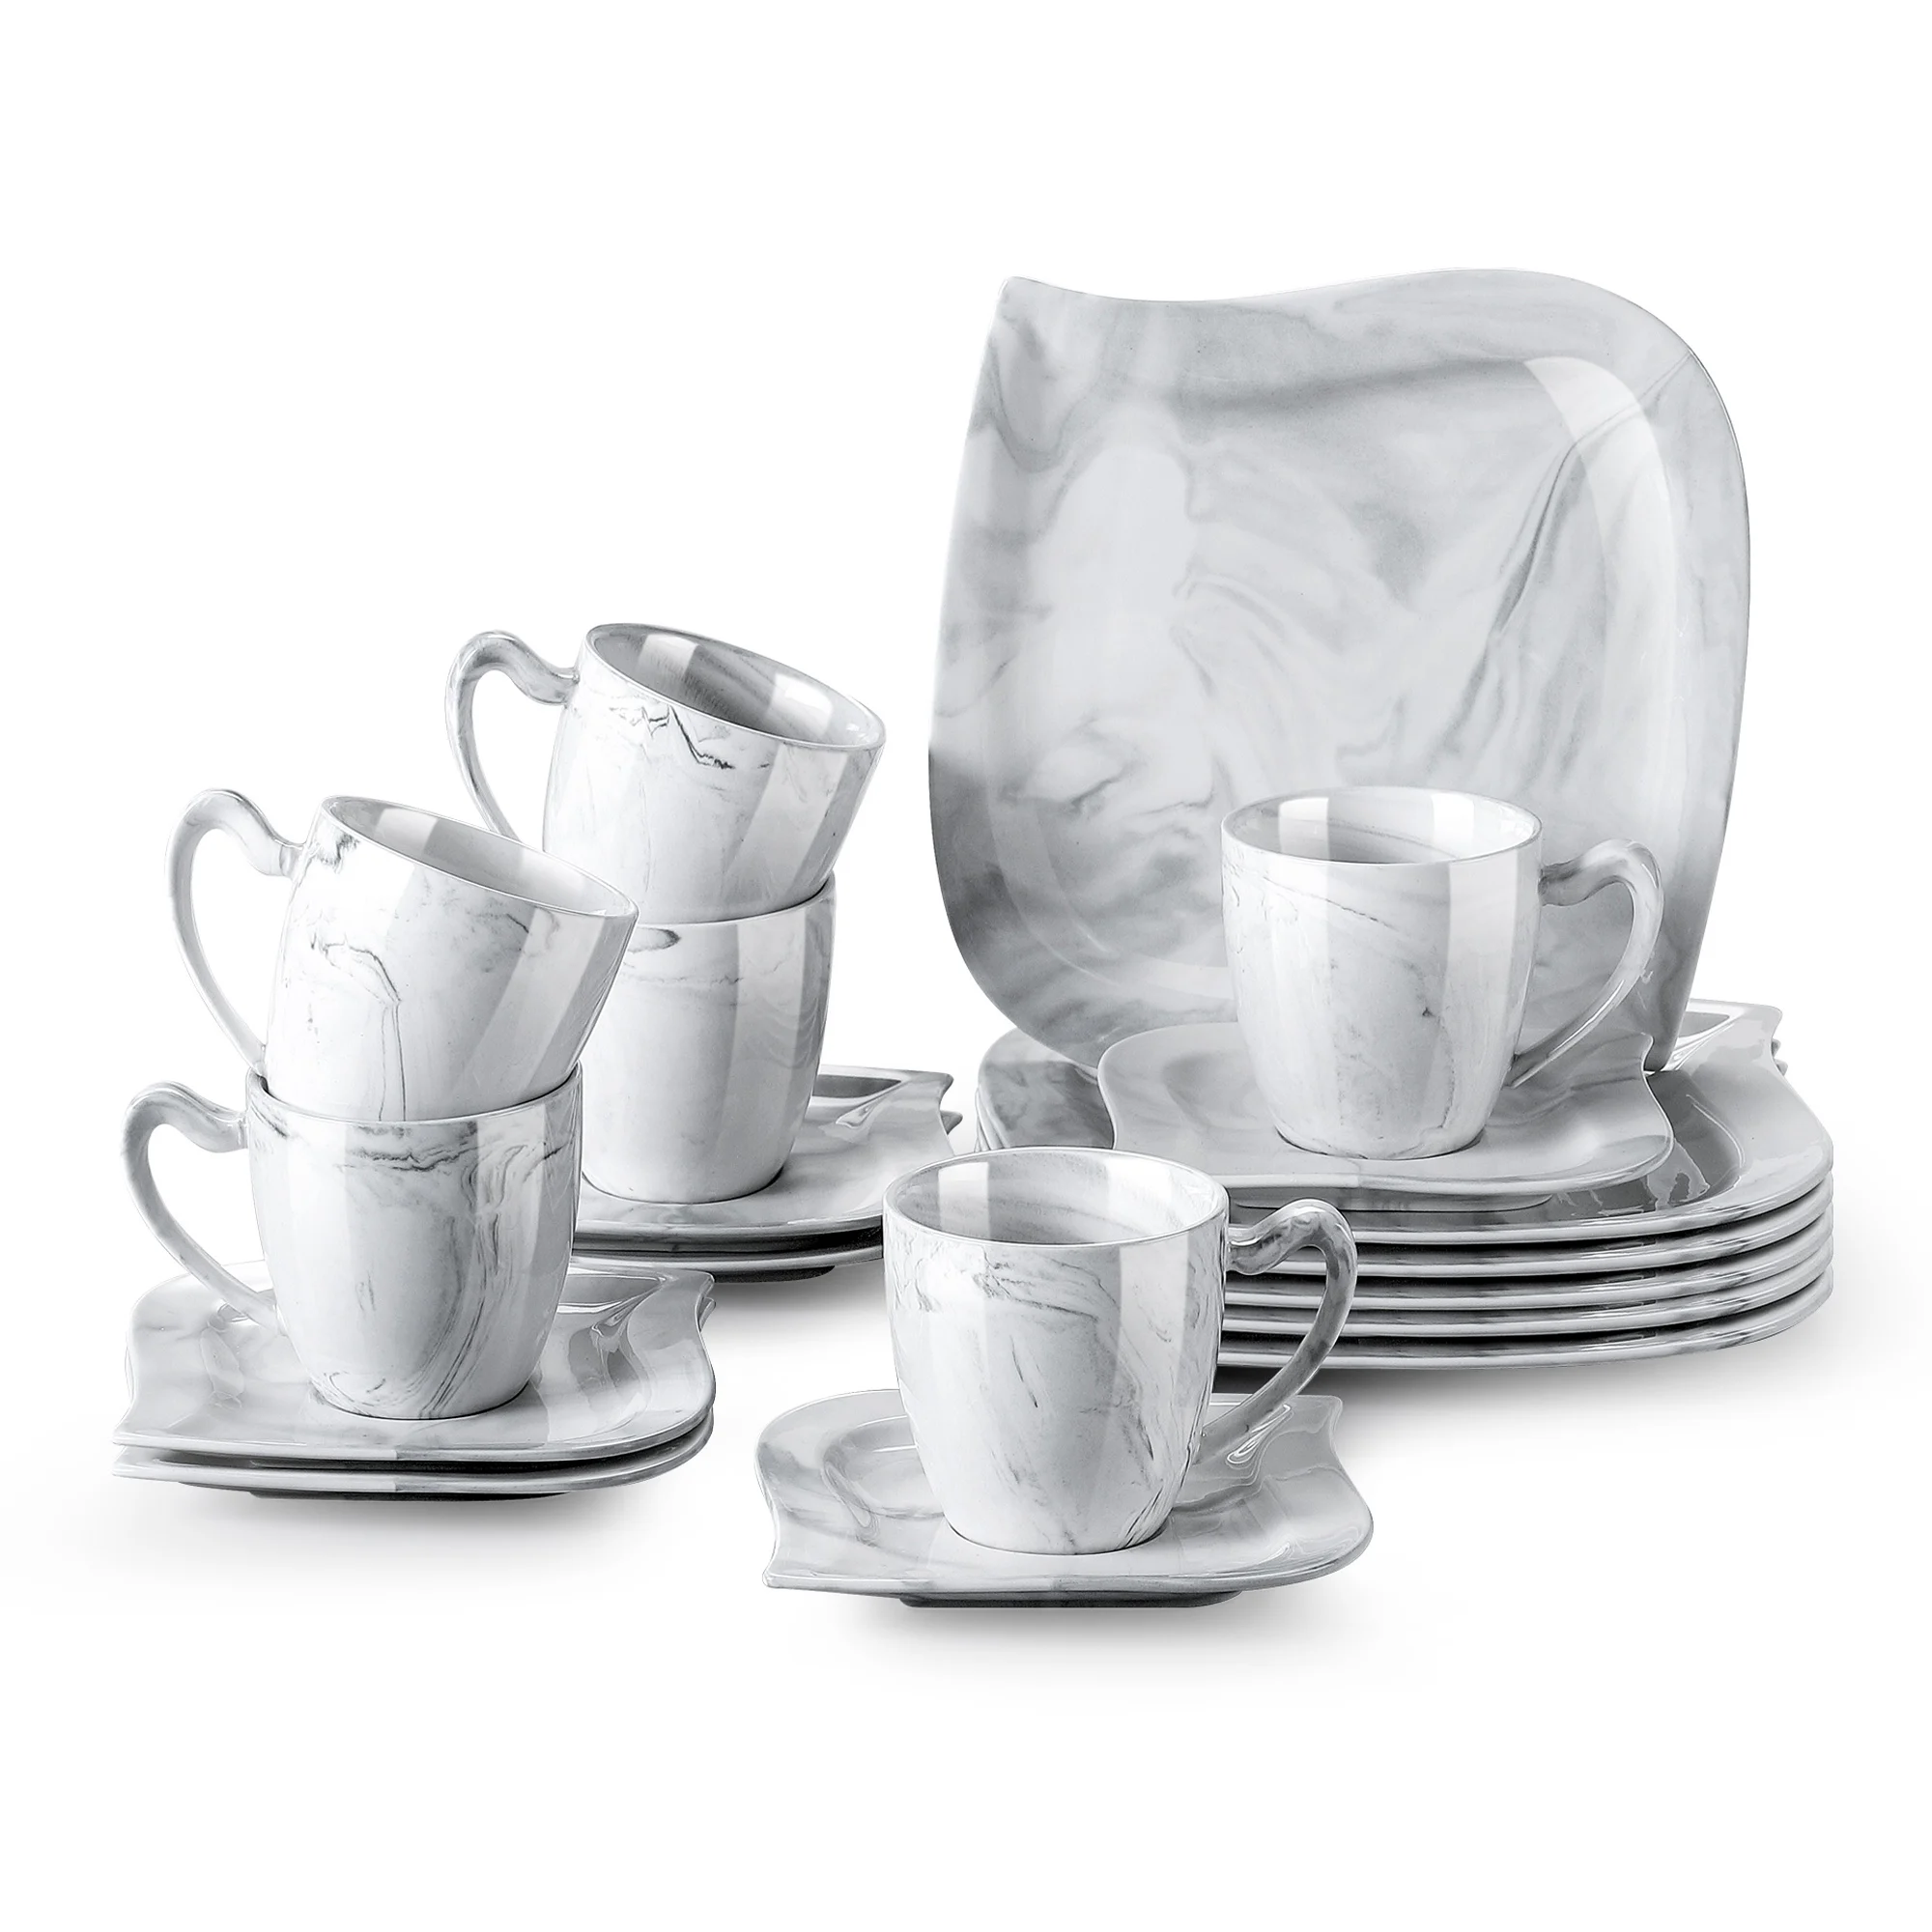 

MALACASA ELVIRA 18/36-Piece Marble Grey Porcelain Afternoon Tea Coffee Cup and Saucer Set with Cups&Saucers,Dessert Plates Set